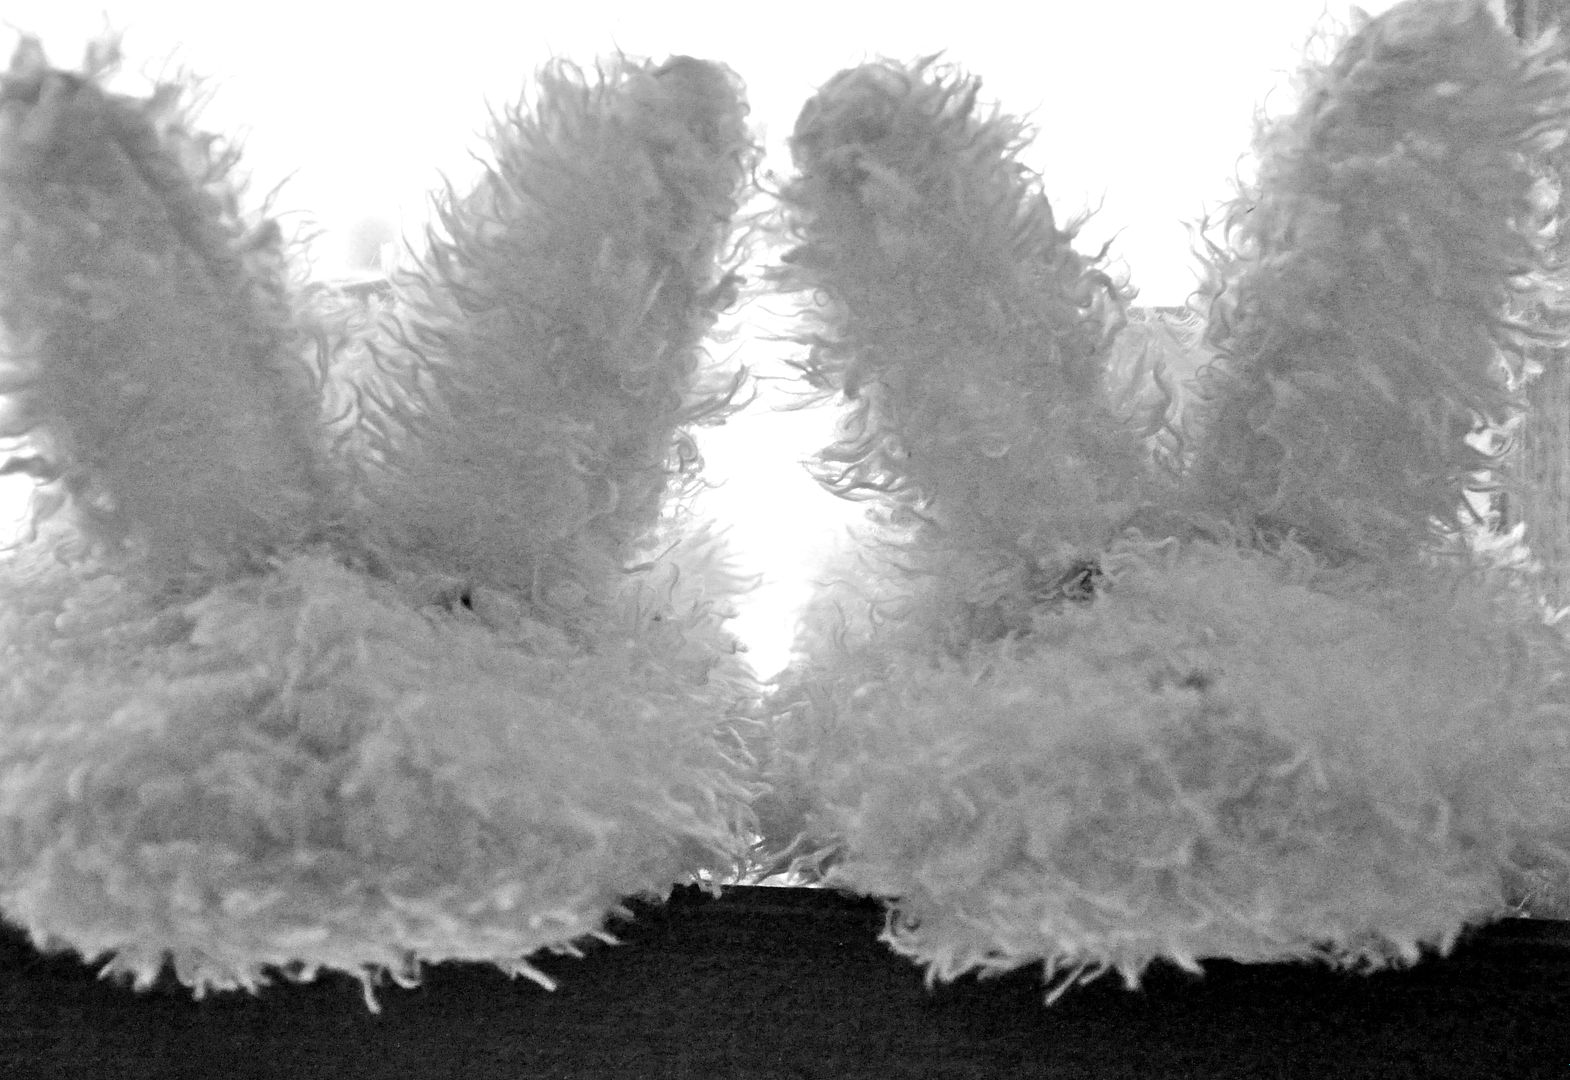 12.2.10 fuzzy bunny baby slippers